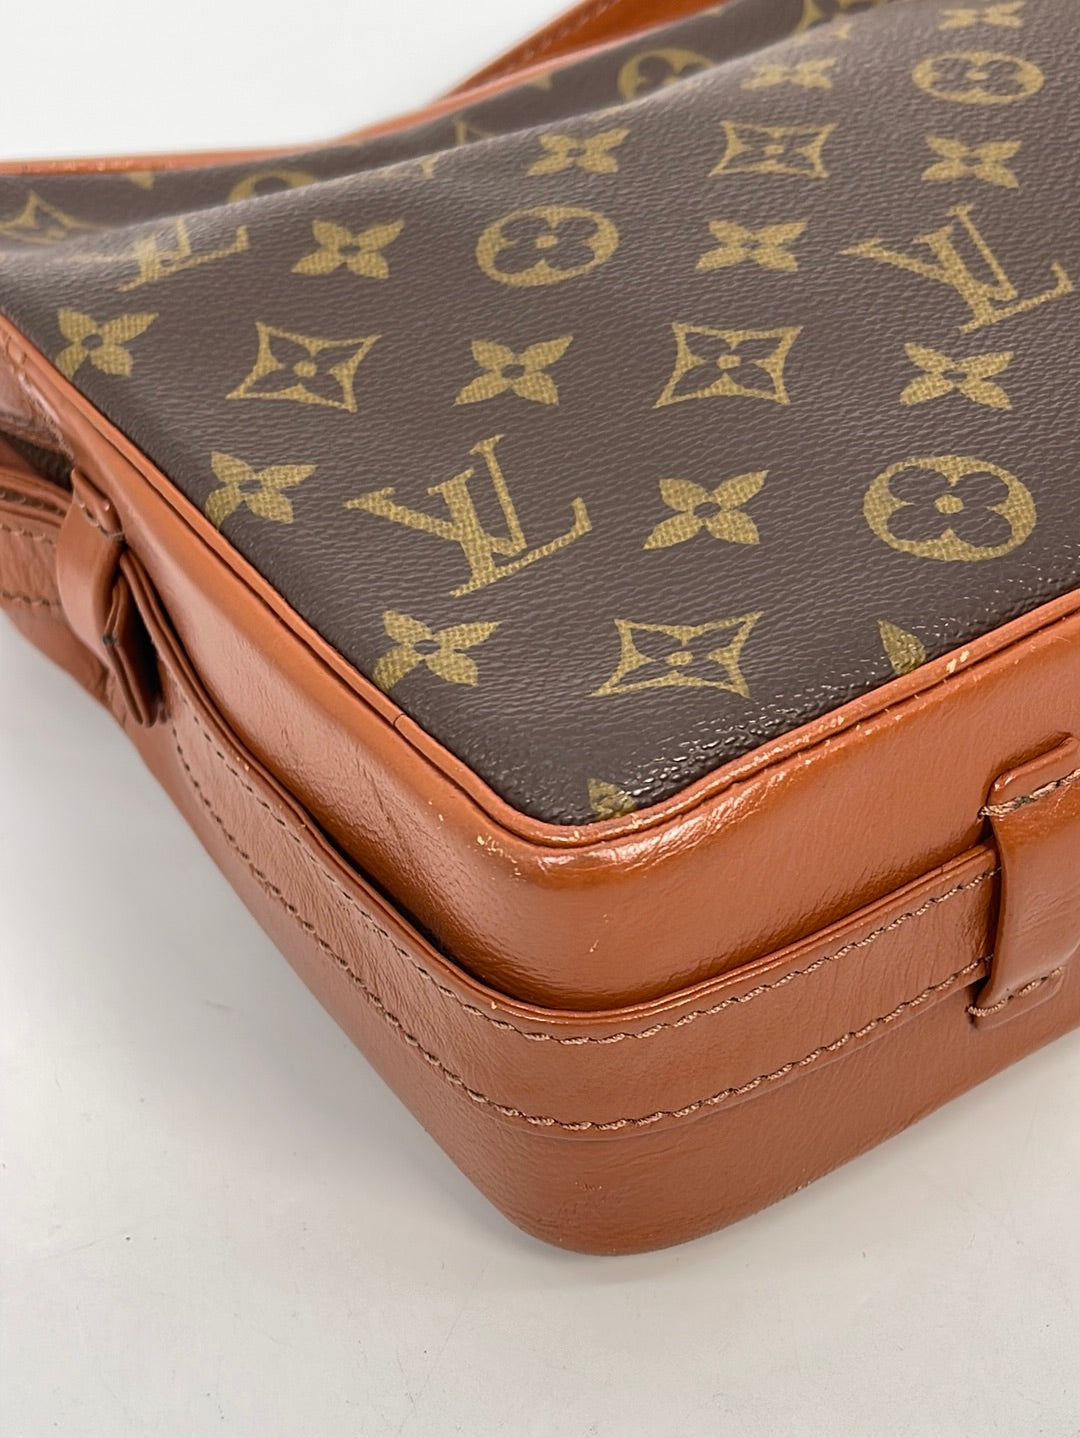 Vintage Louis Vuitton Monogram Sac Bandouliere 30 Bag with